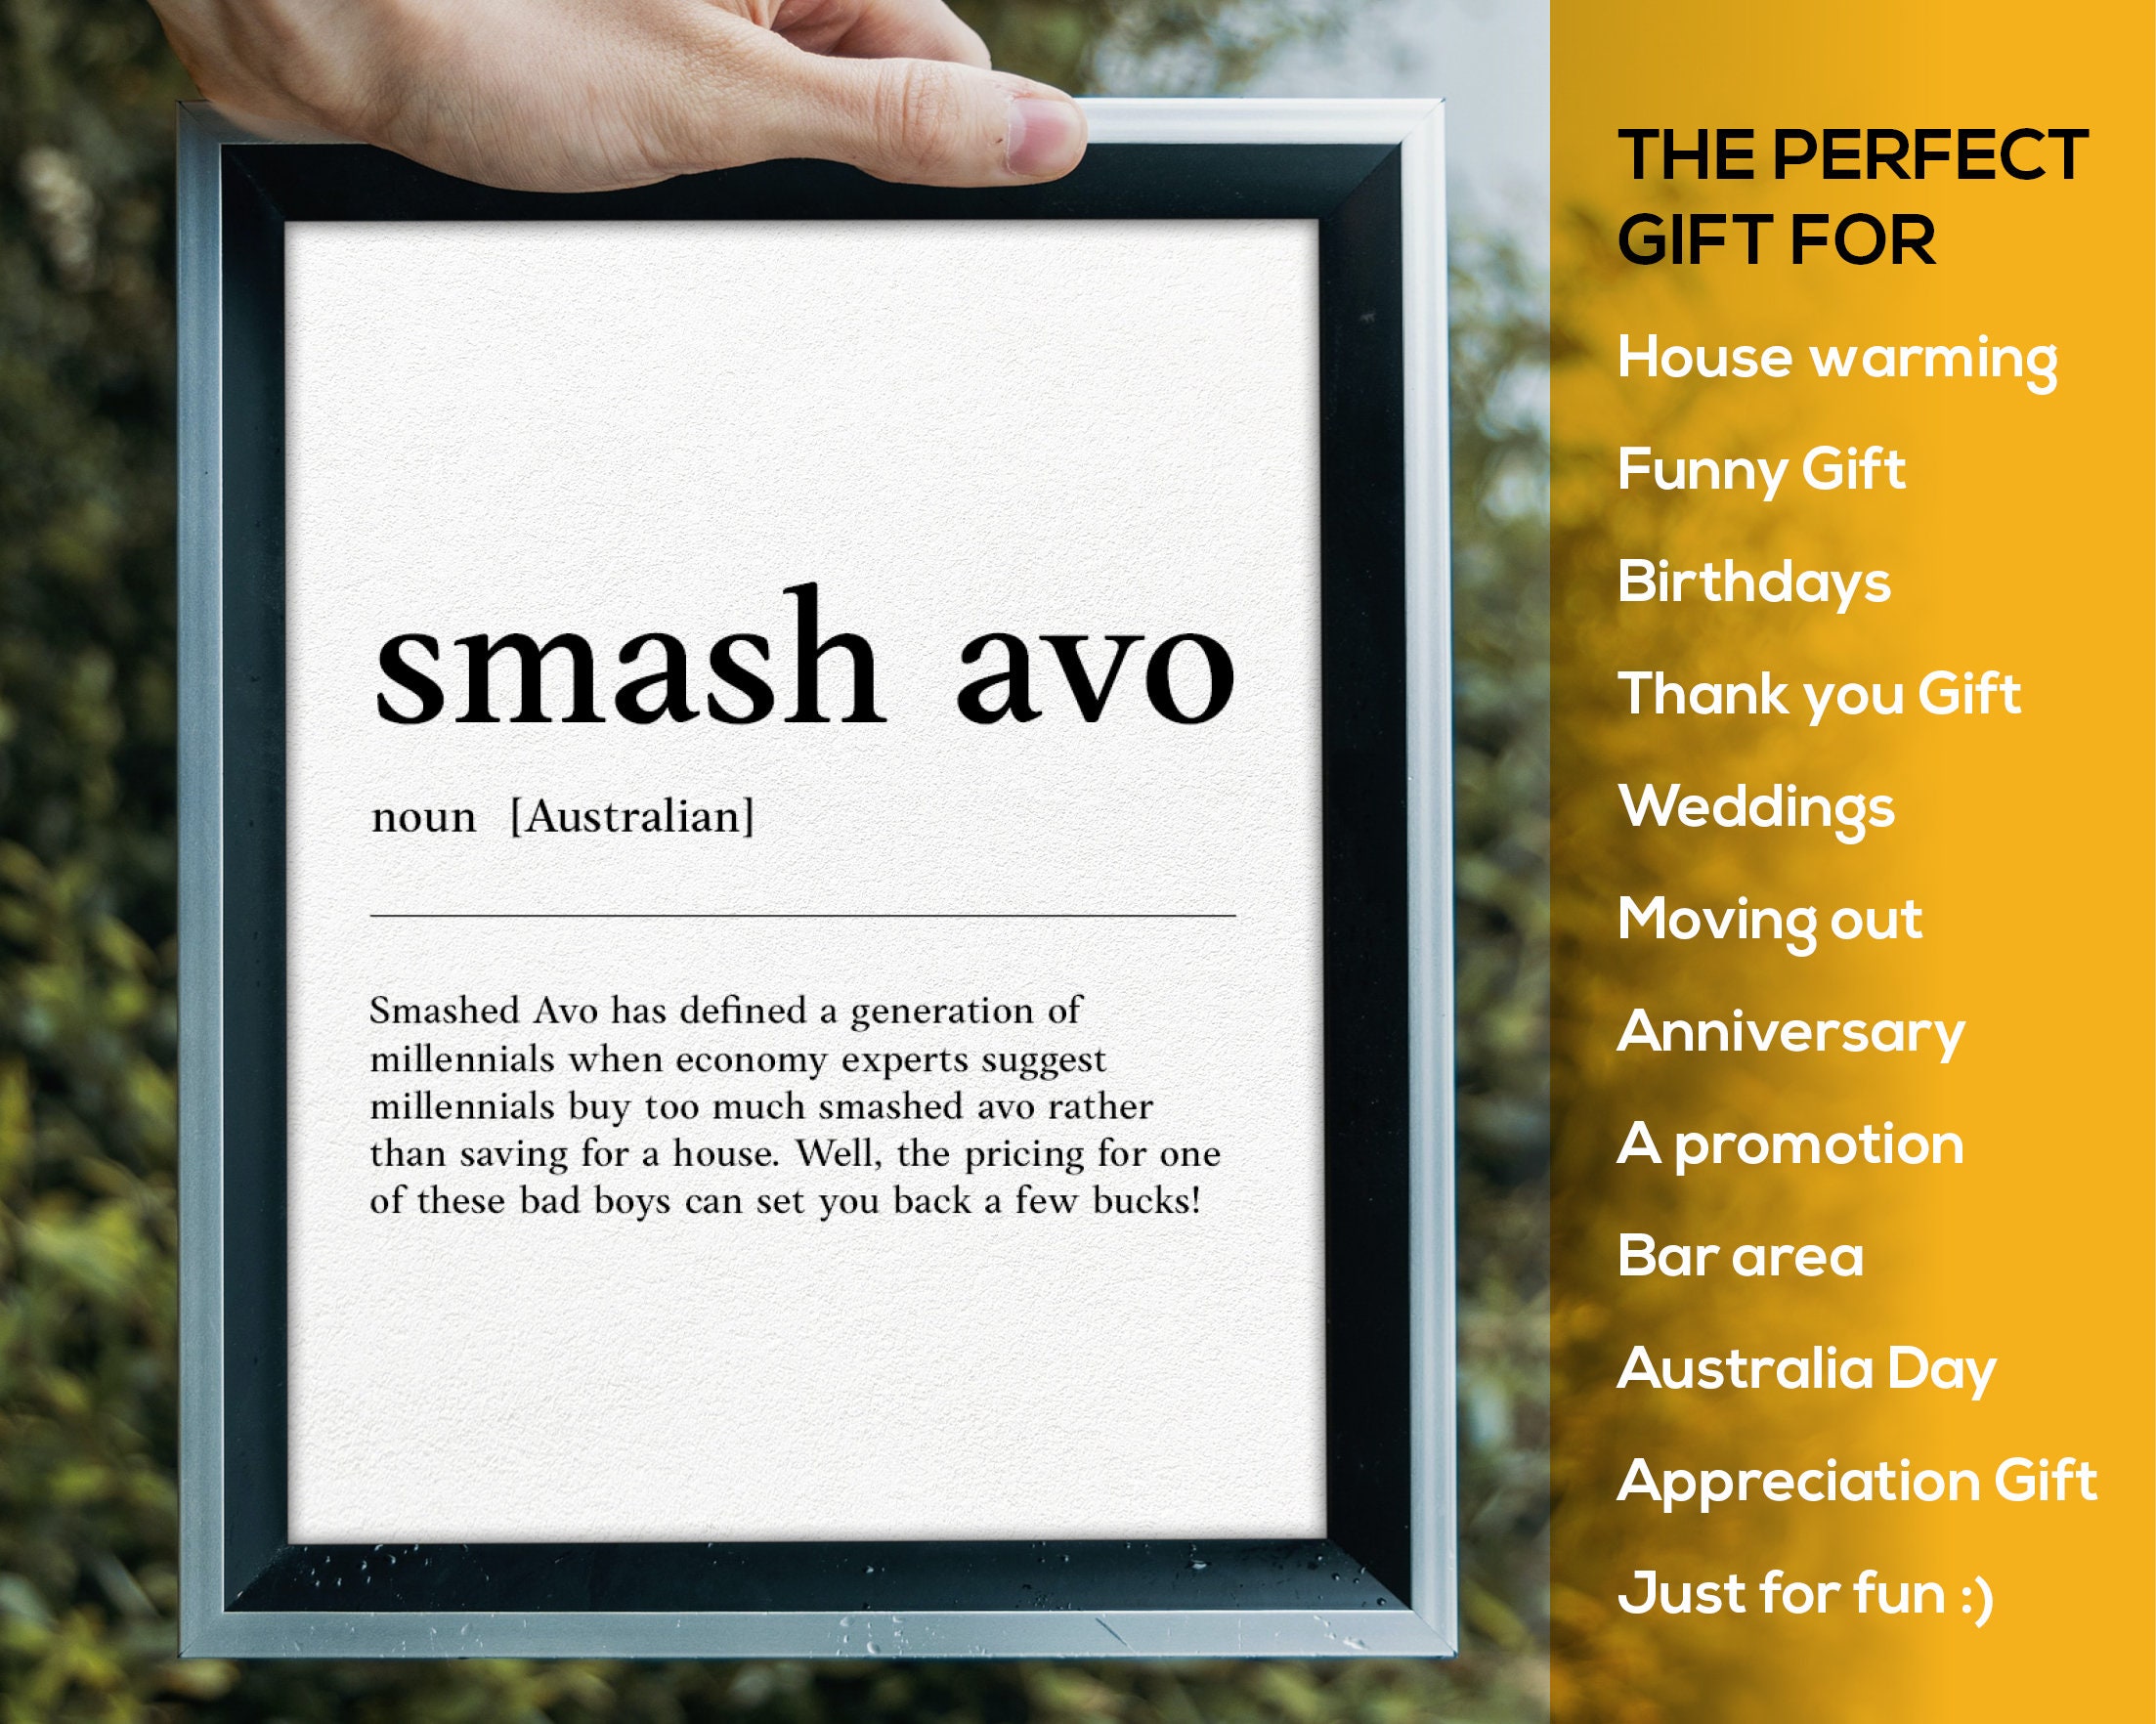 Smashed Avo Drunk Funny Australian Slang, Phrase and Humor